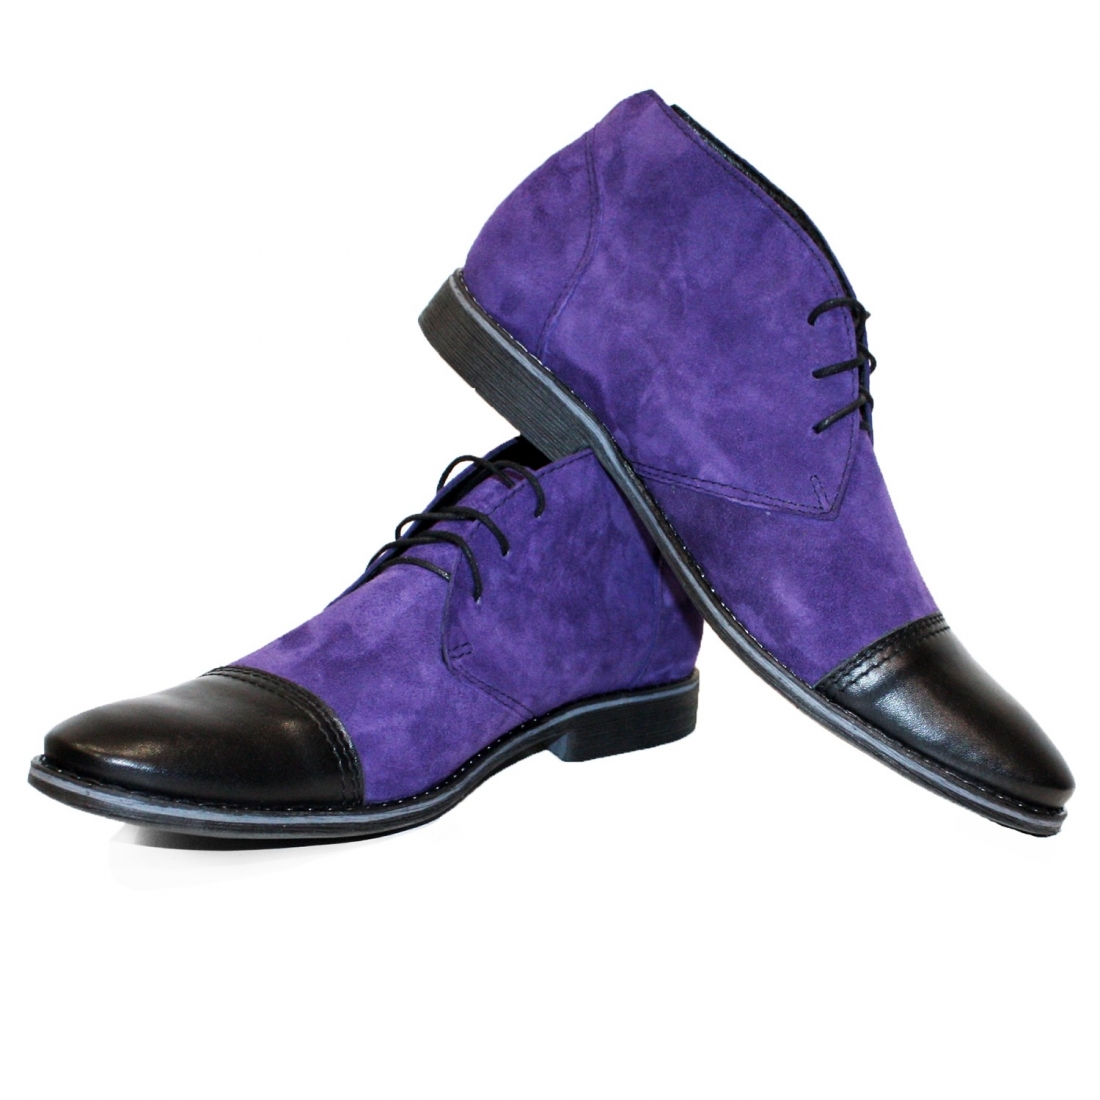 Modello Vilgero - Chukka Boots - Handmade Colorful Italian Leather Shoes